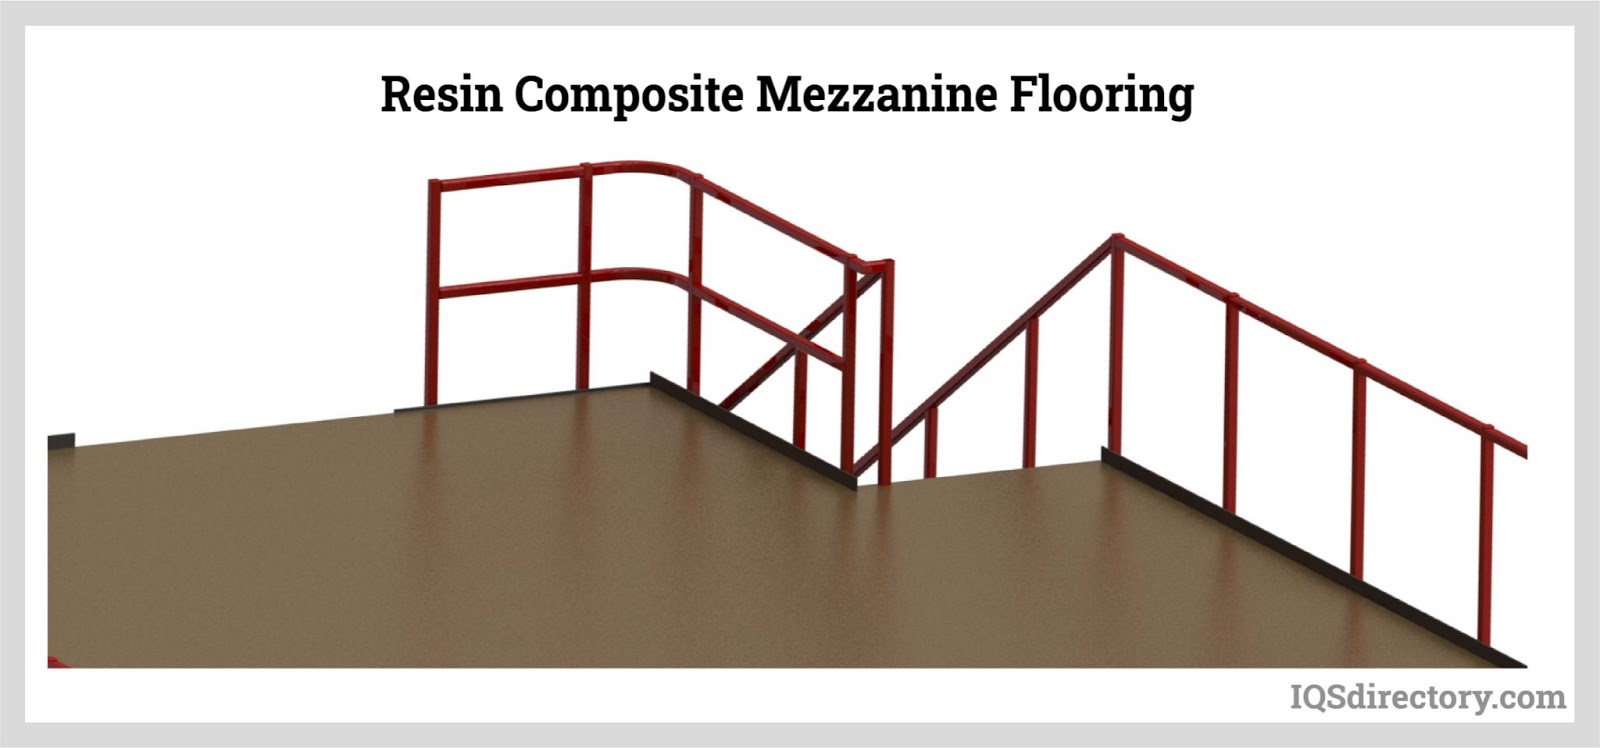 Resin Composite Mezzanine Flooring